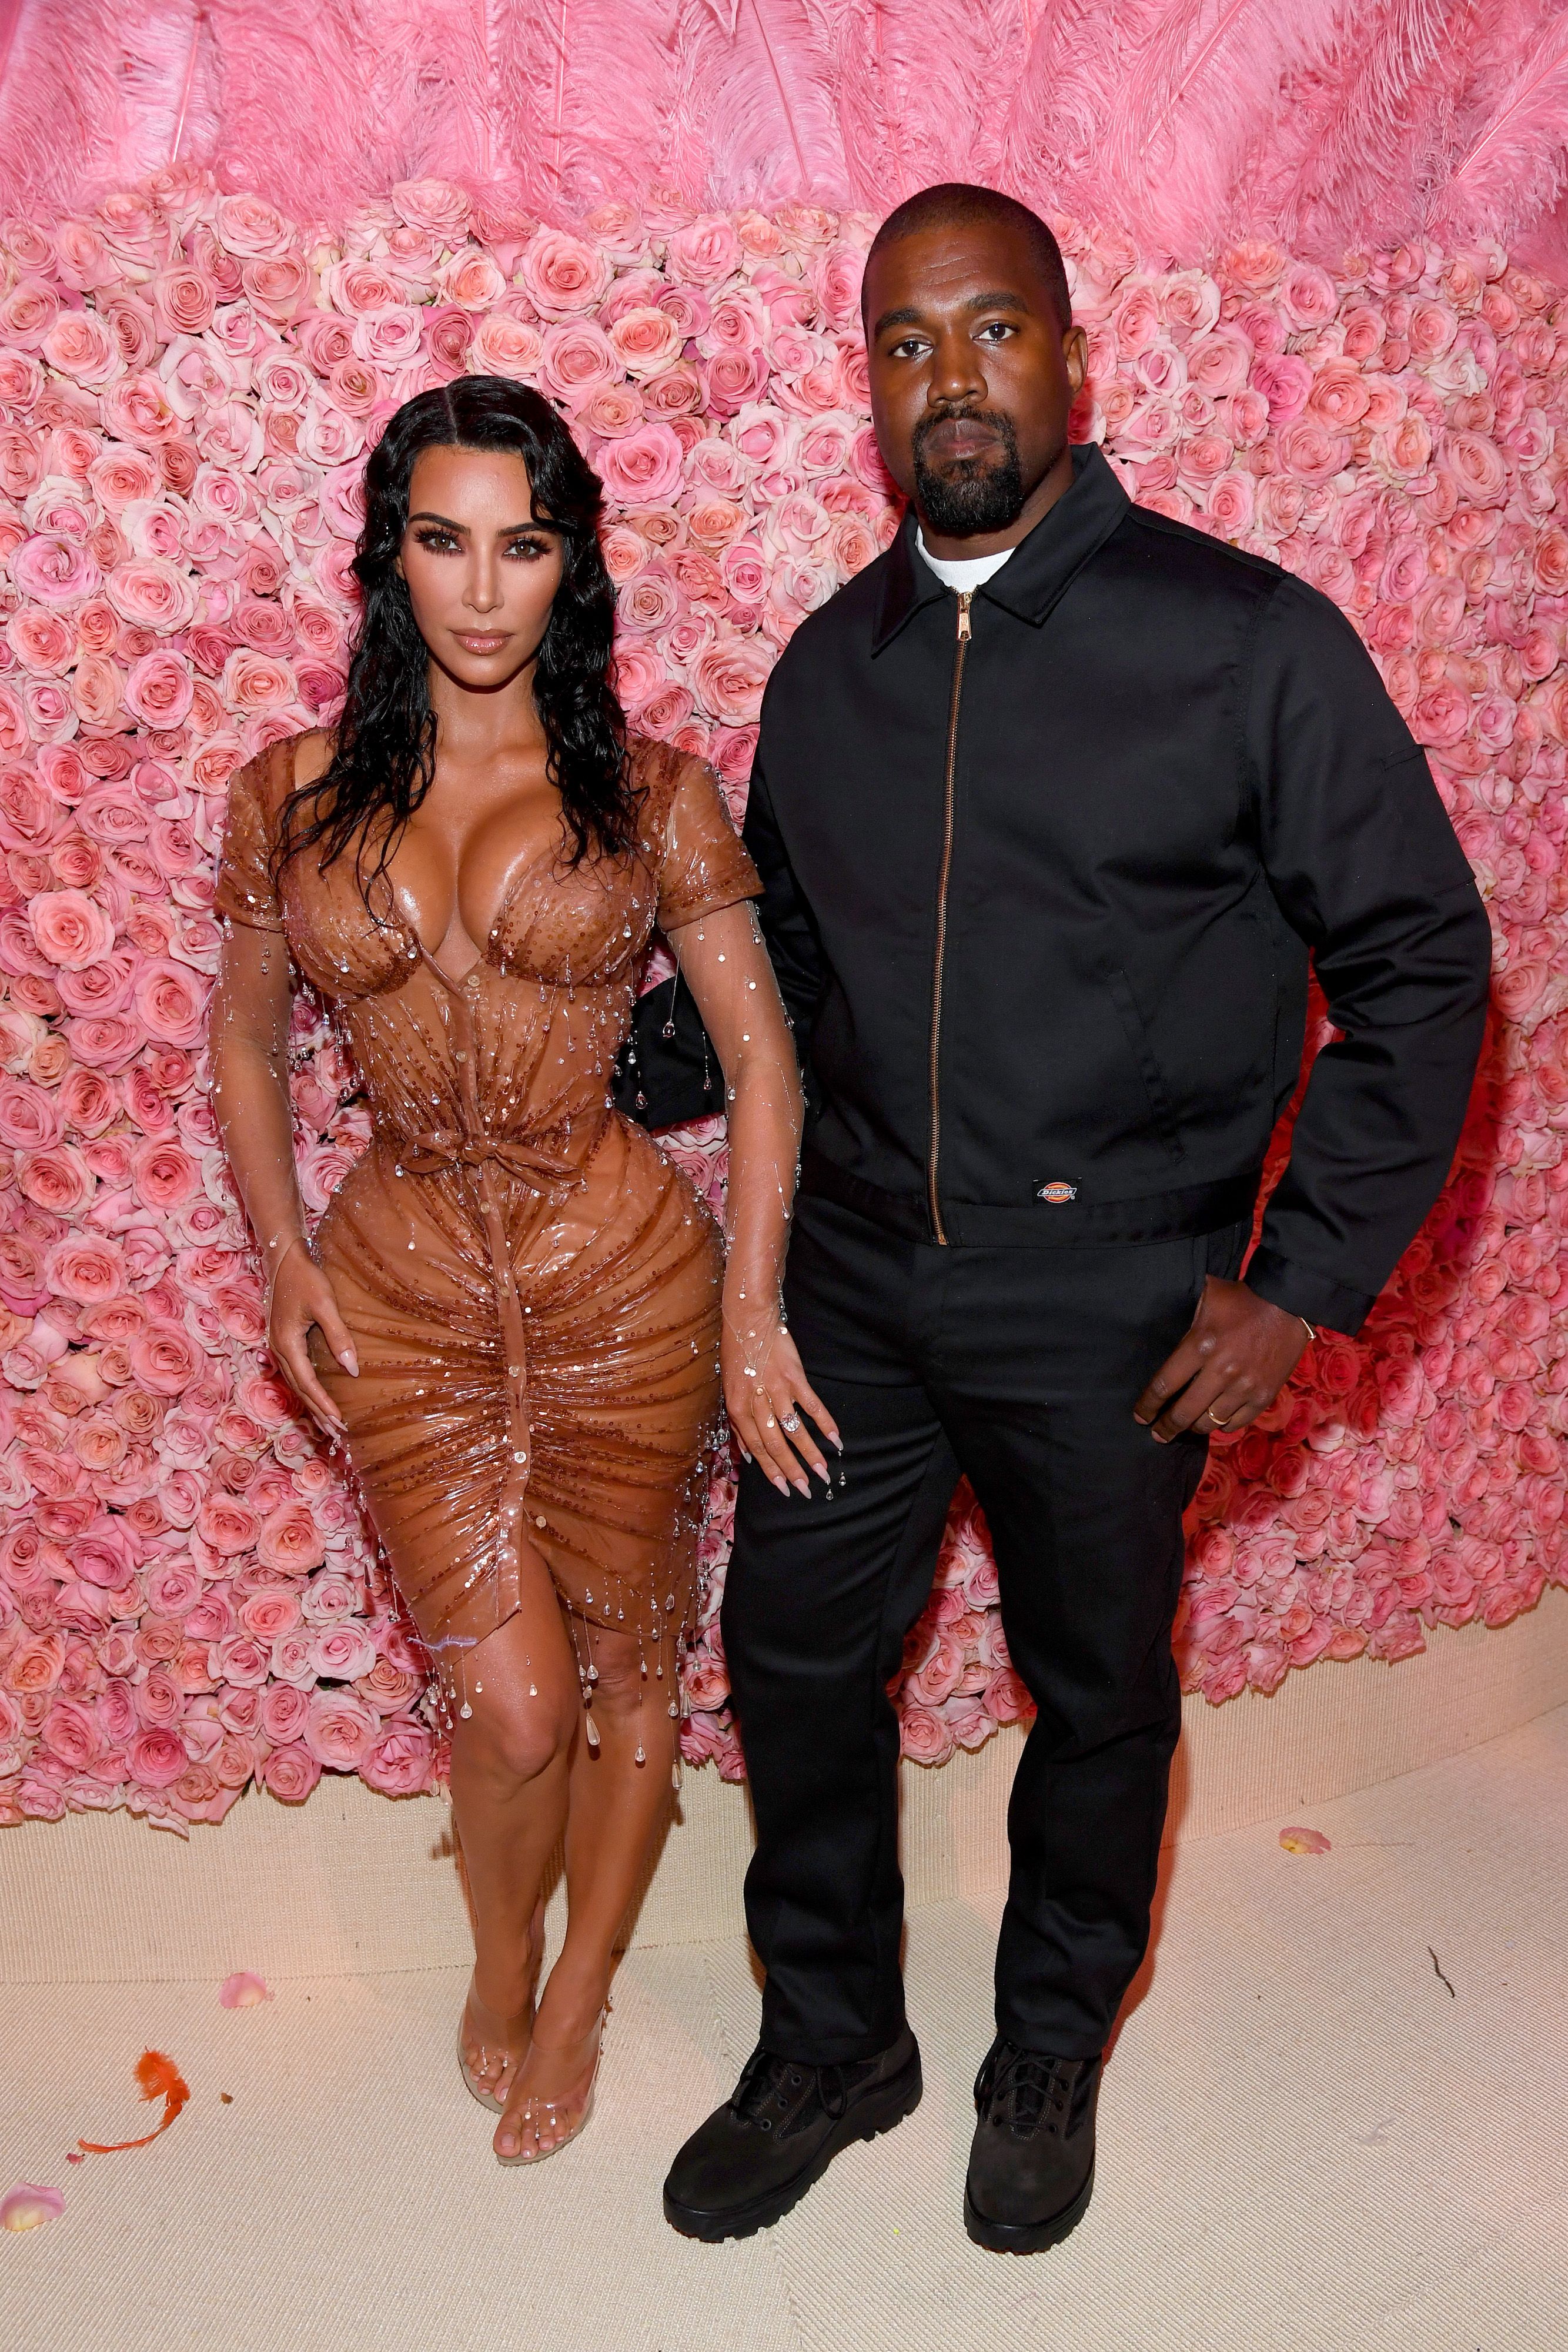 Kim Kardashian Pron Video - Kanye West Opens Up About Sex Addiction And Kim Kardashian Marriage